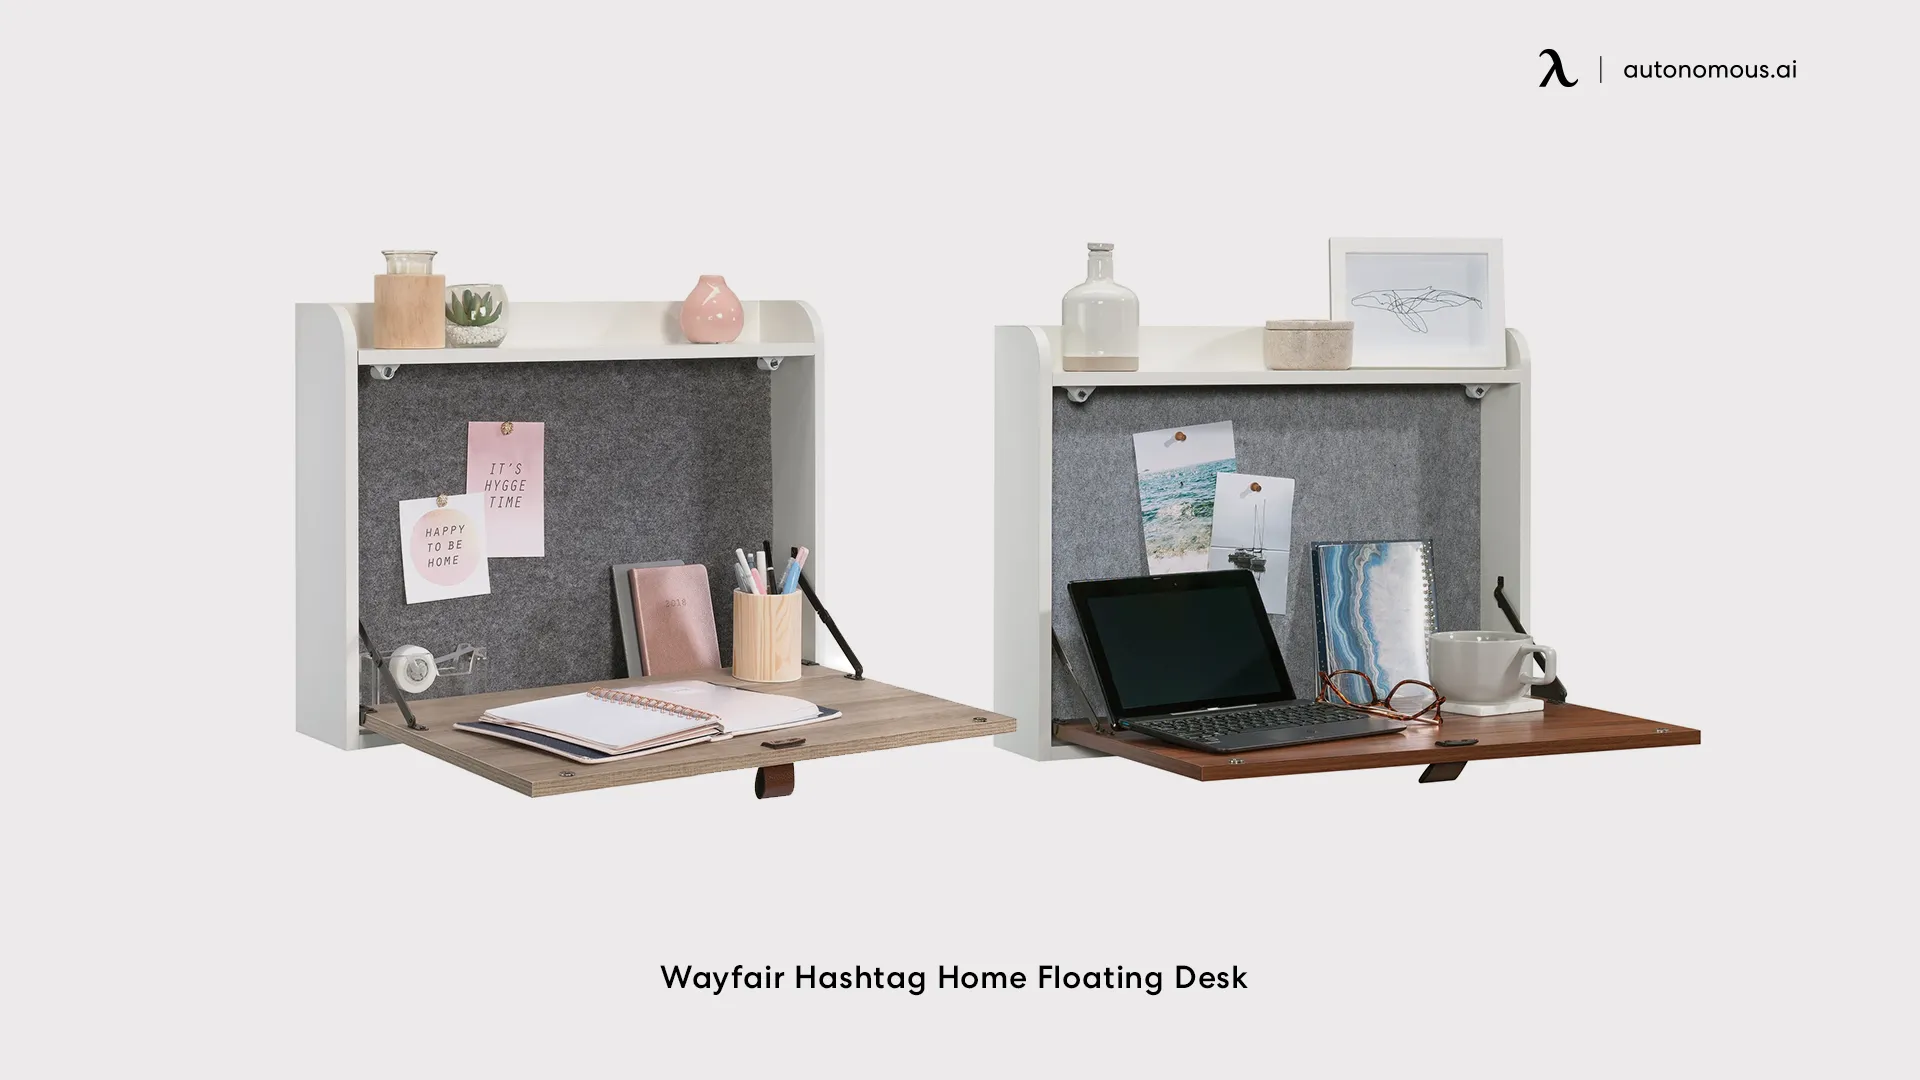 Hashtag Home Floating Desk